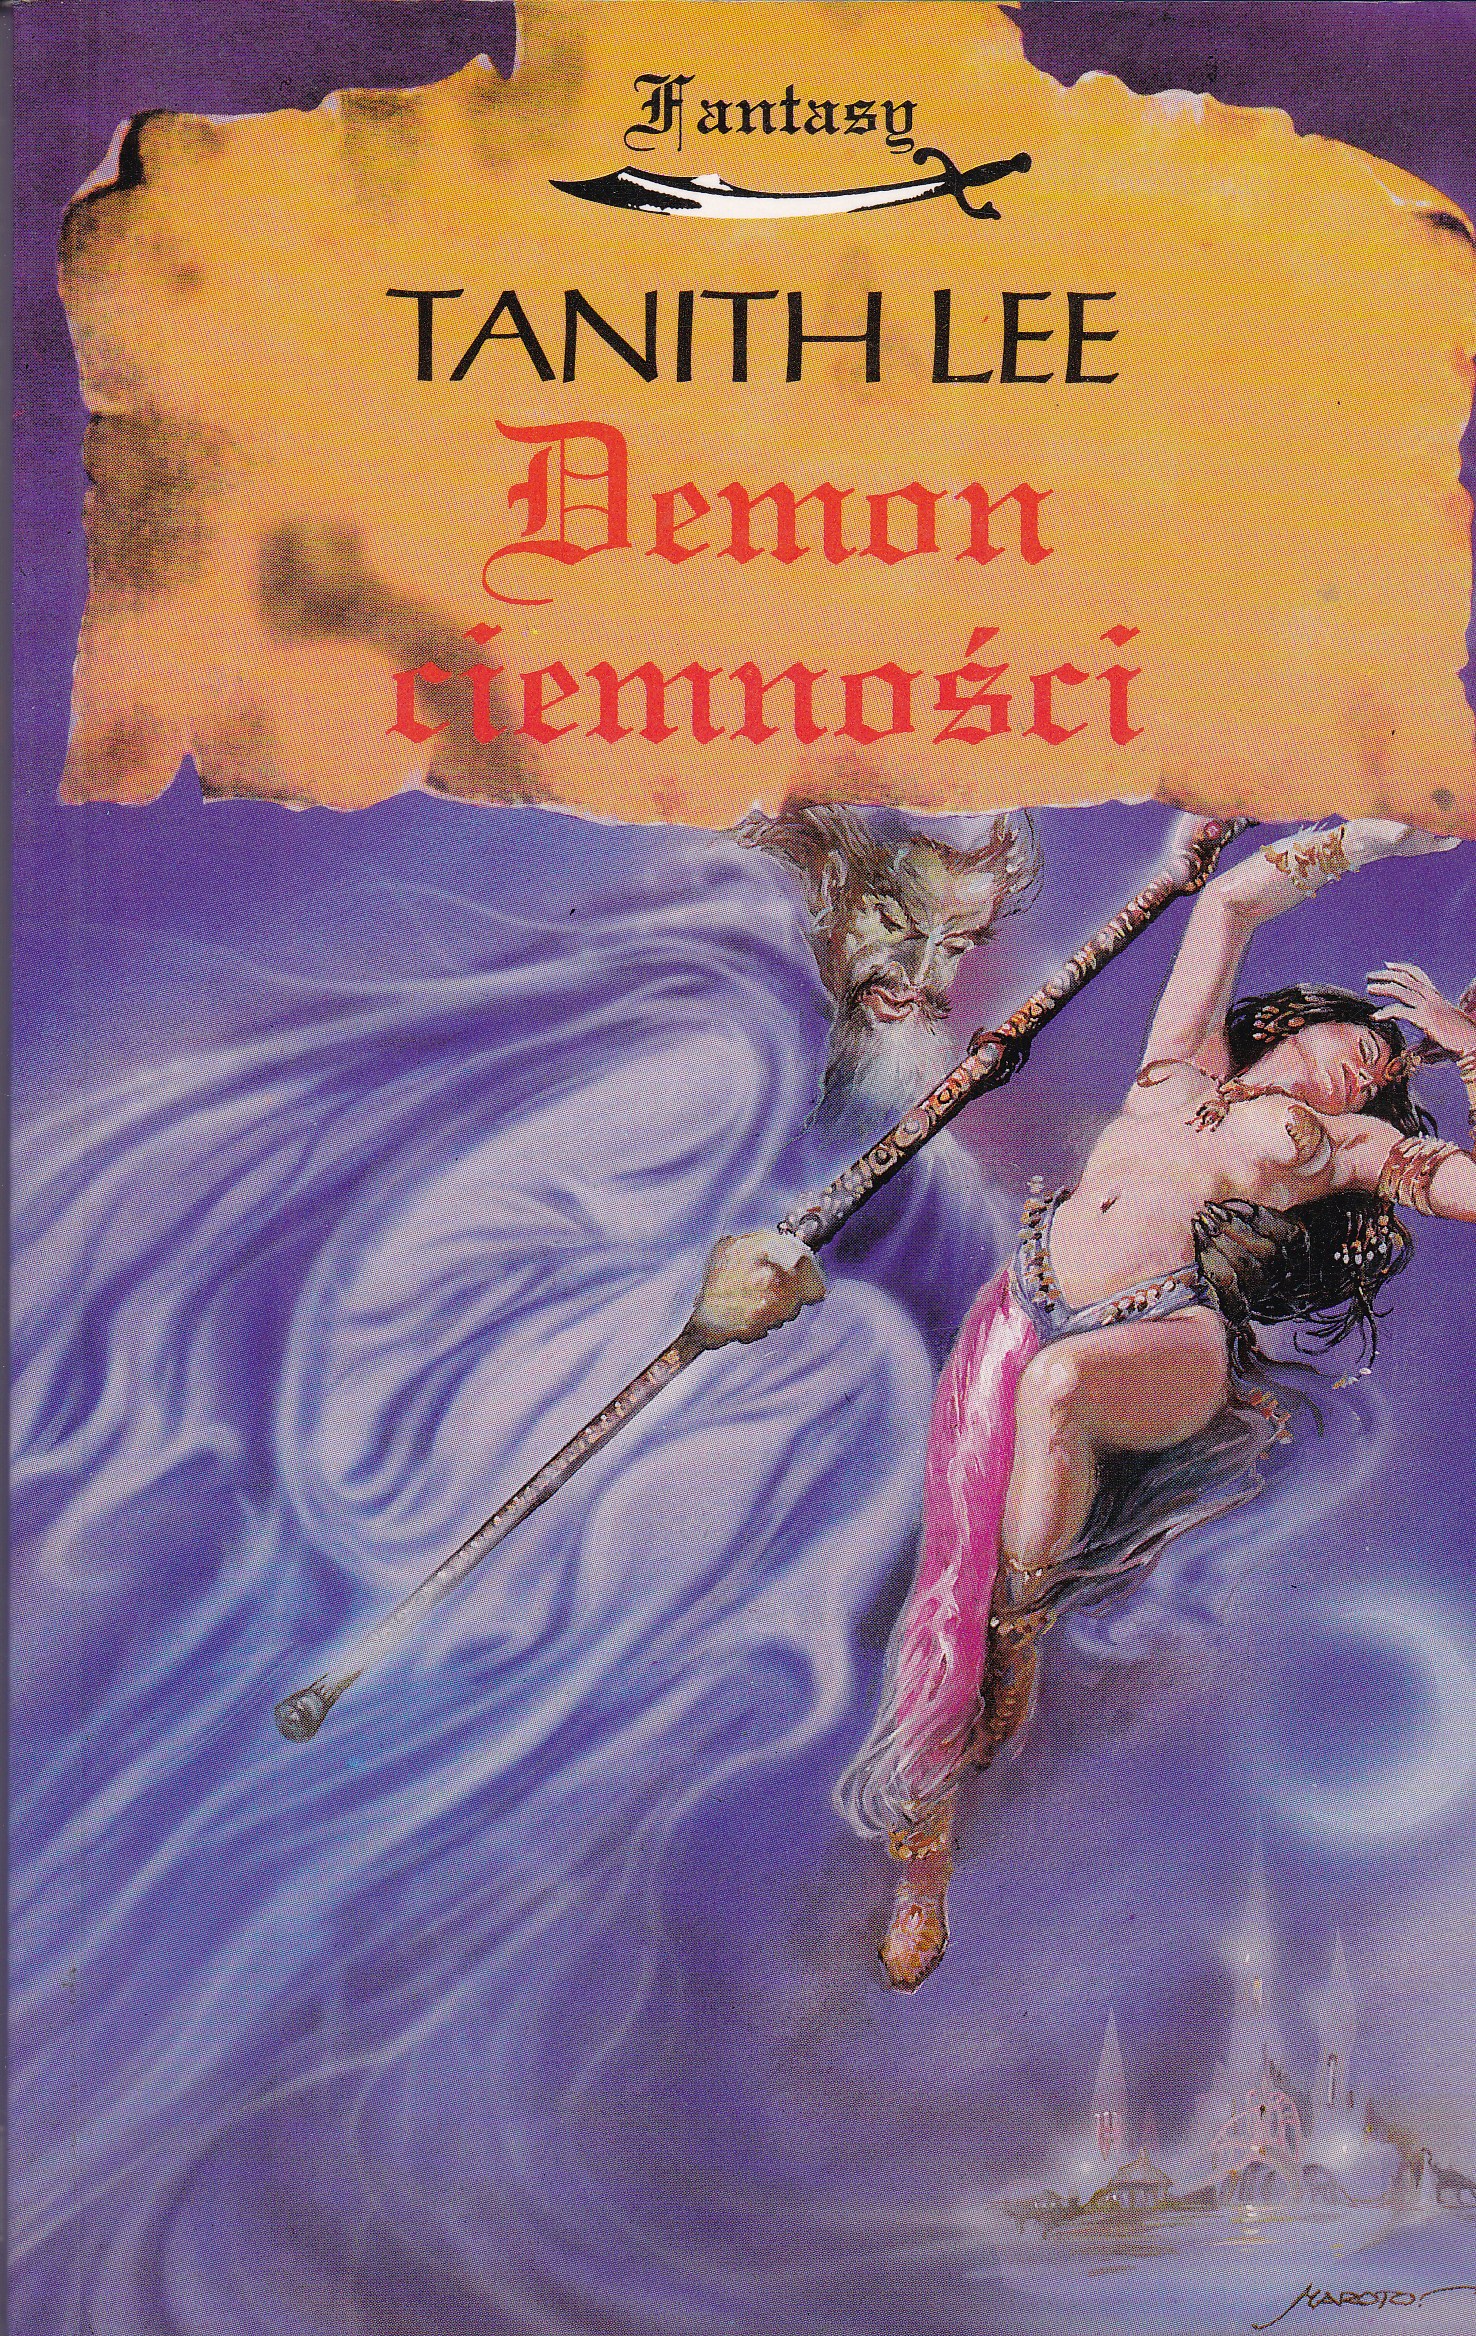 Demon Ciemnosci (Night's Master)